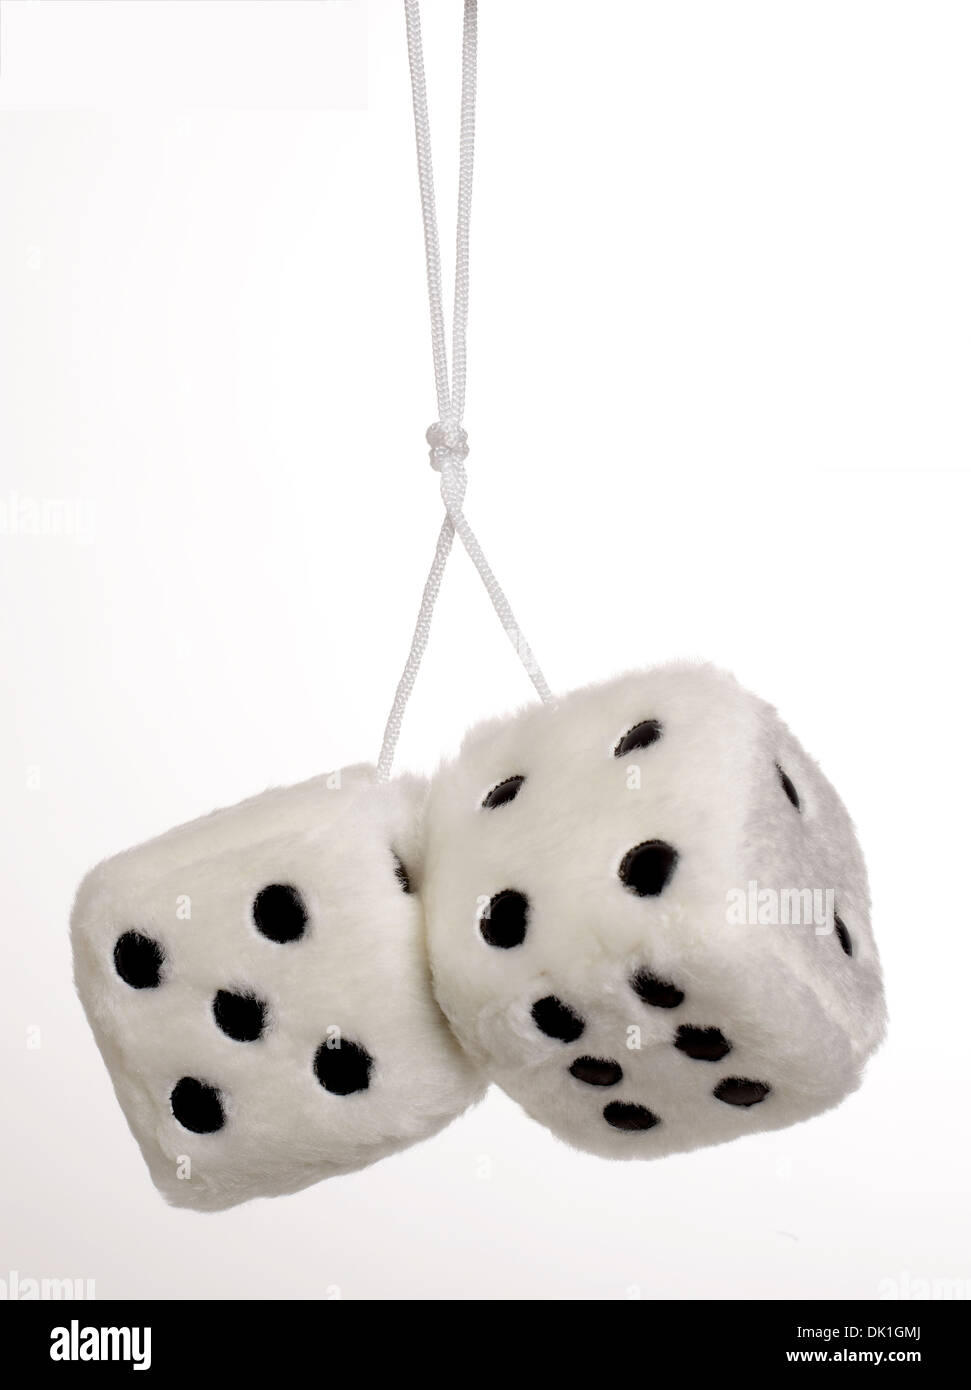 2 oversized White fuzzy dice on white background Stock Photo